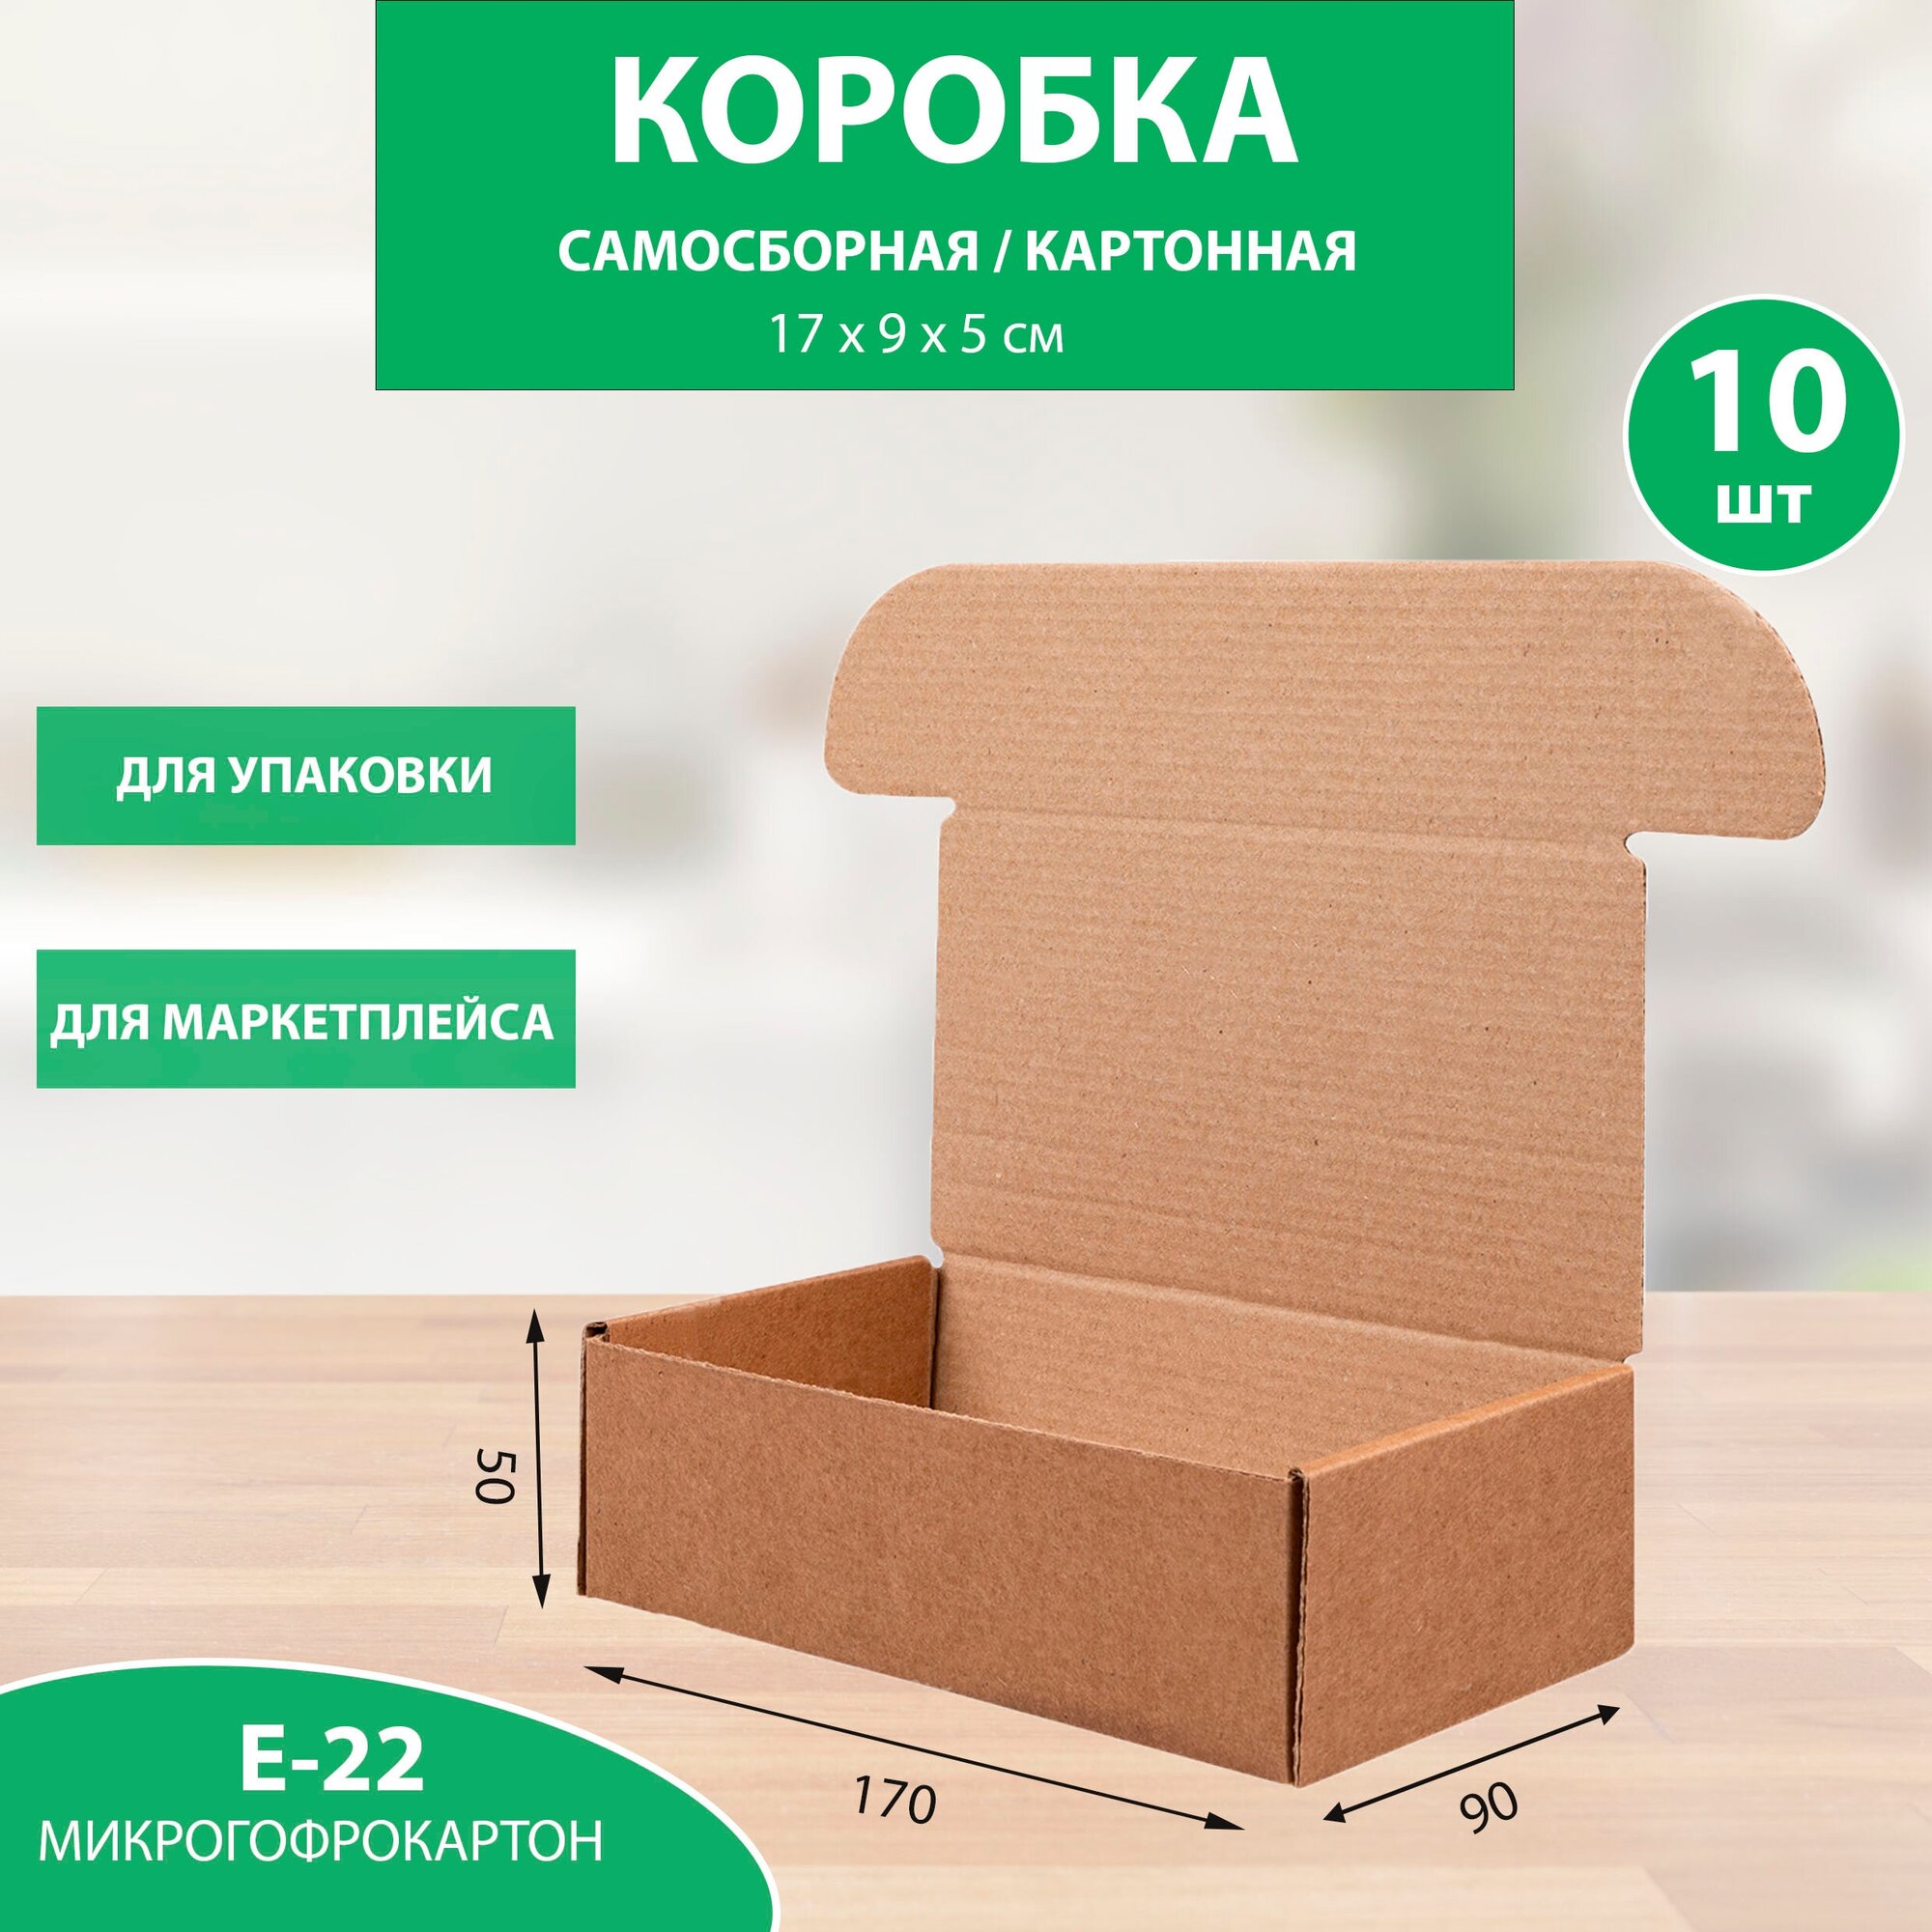 Коробка 170х90х50 мм. картонная для хранения №201 (премиум), Упаковка для маркетплейсов. 10 шт.